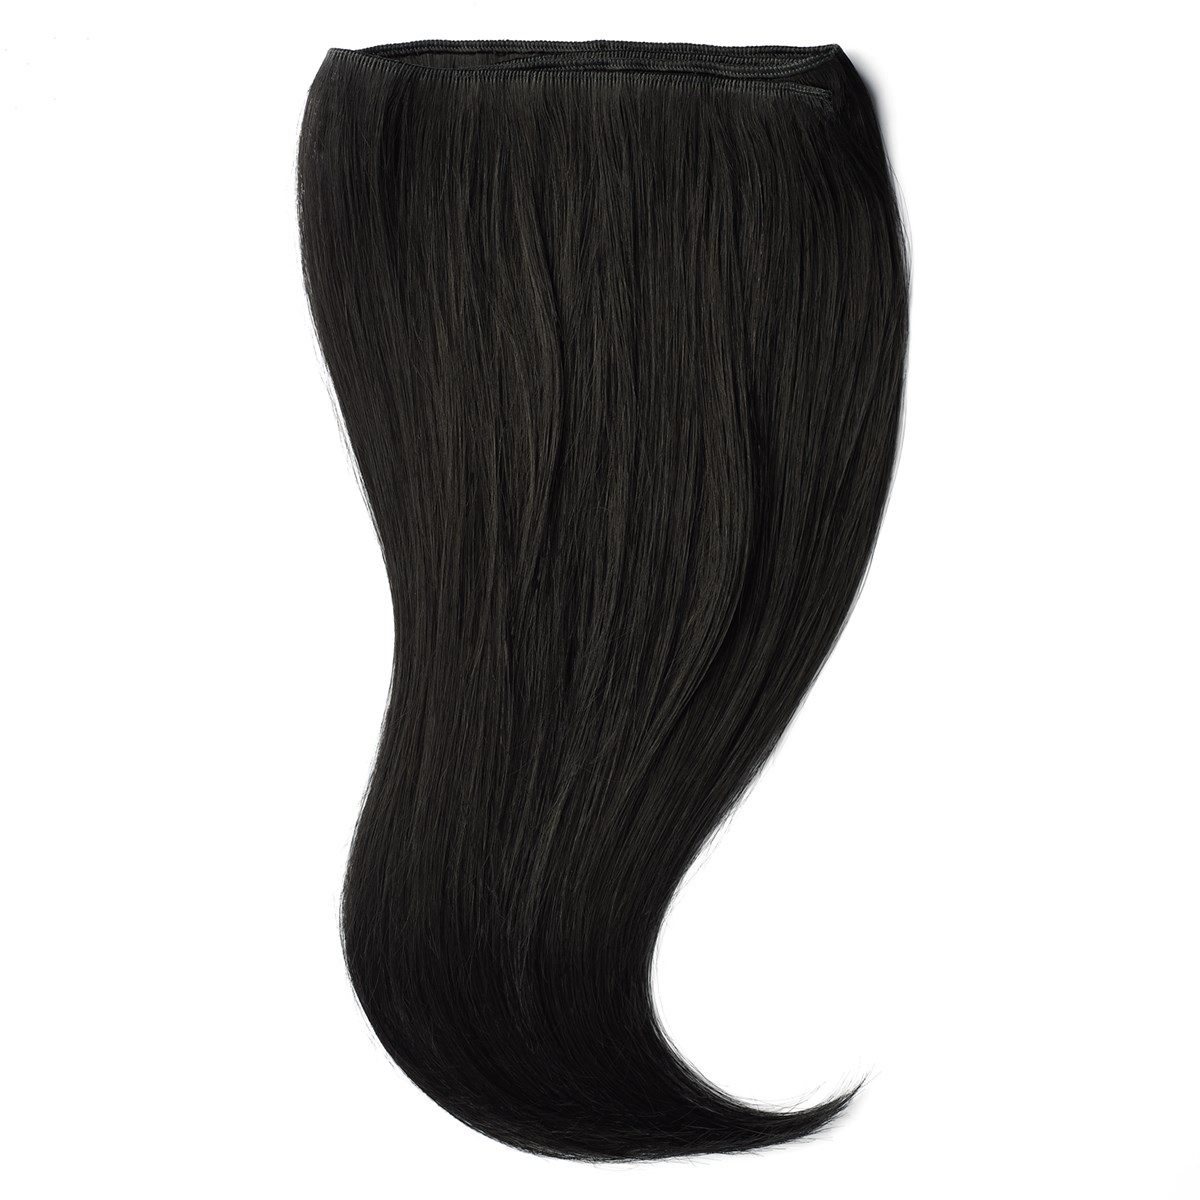 Rapunzel of Sweden Hair Weft Weft Extensions - Single Layer 40 cm  1.0